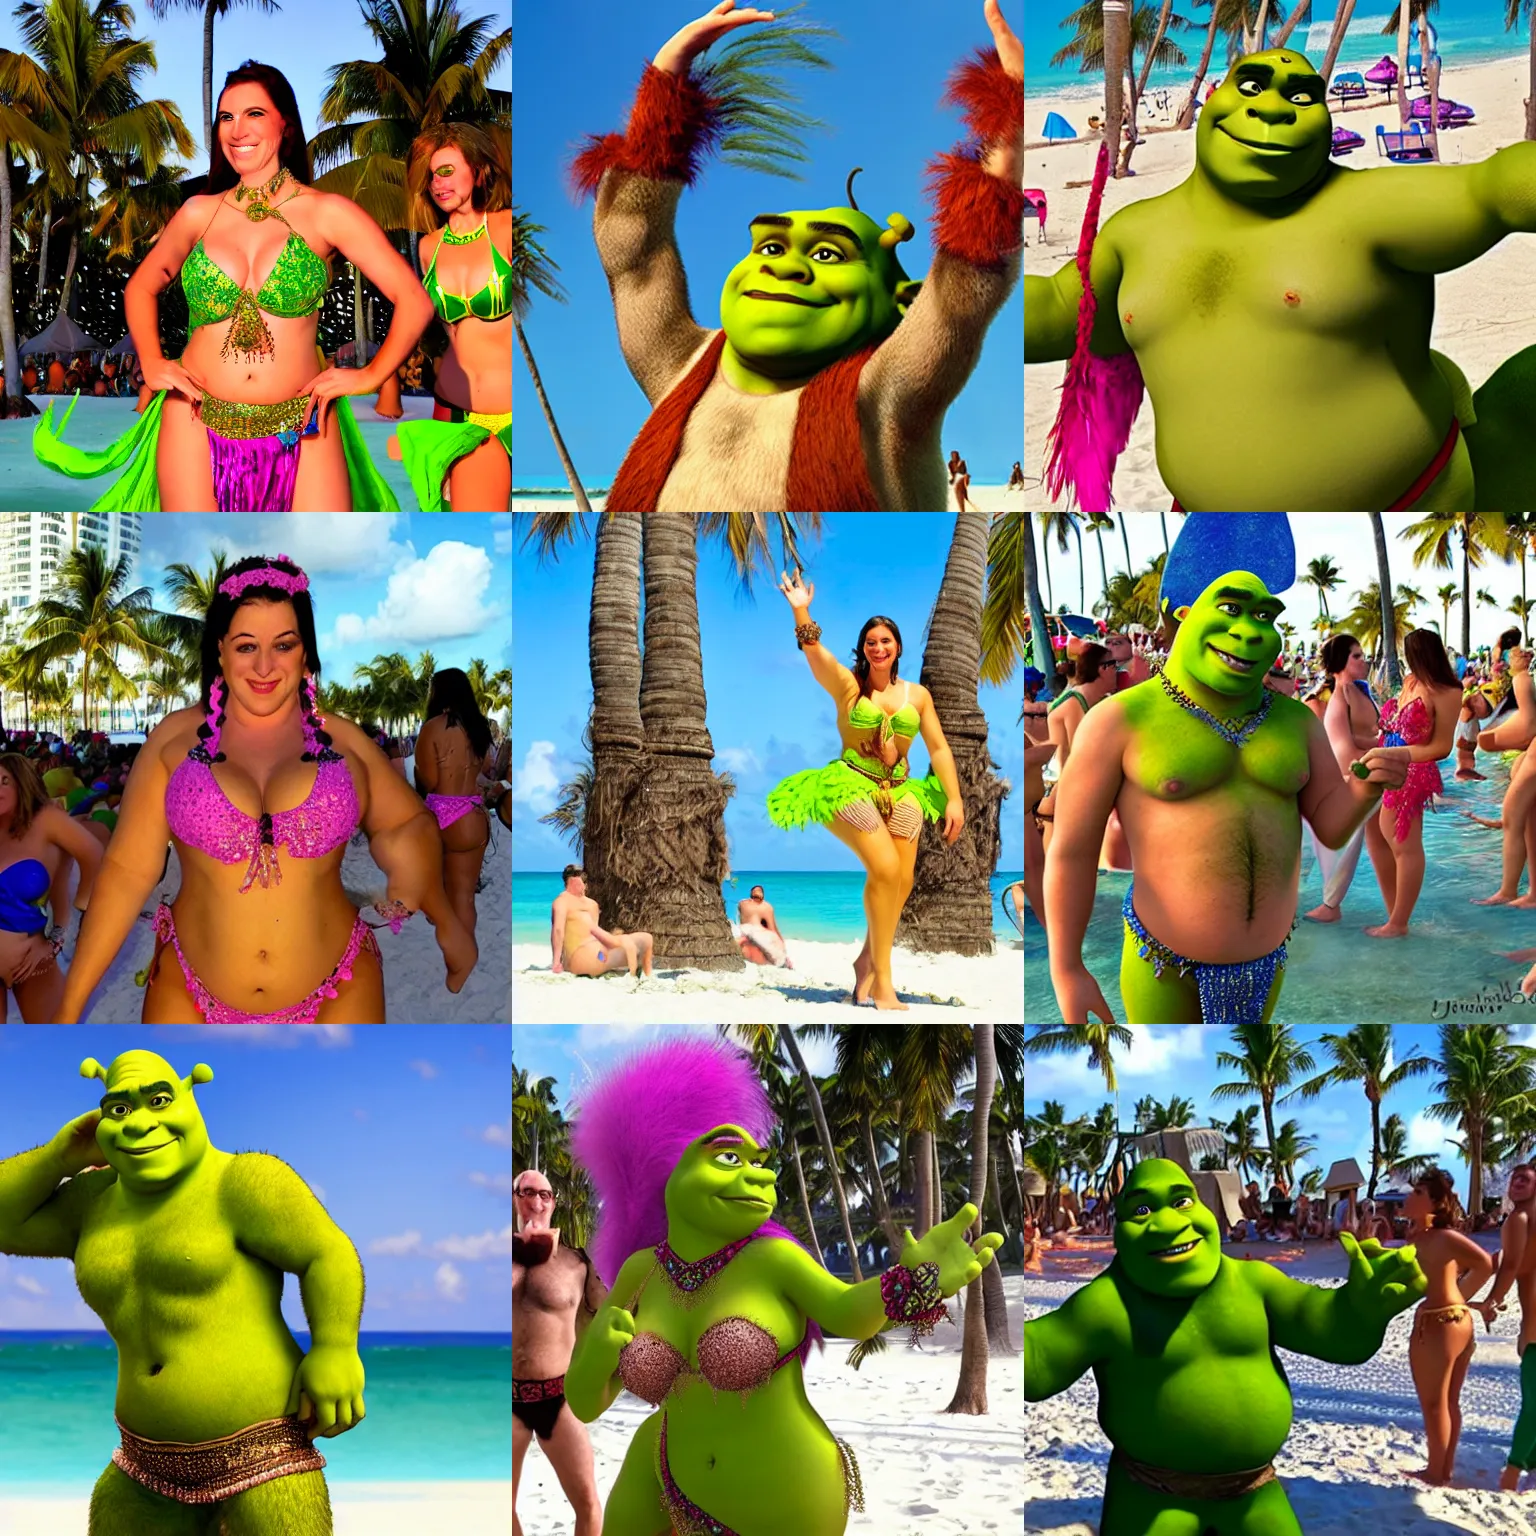 Prompt: Shrek in a bikini doing a belly dance on Miami Beach